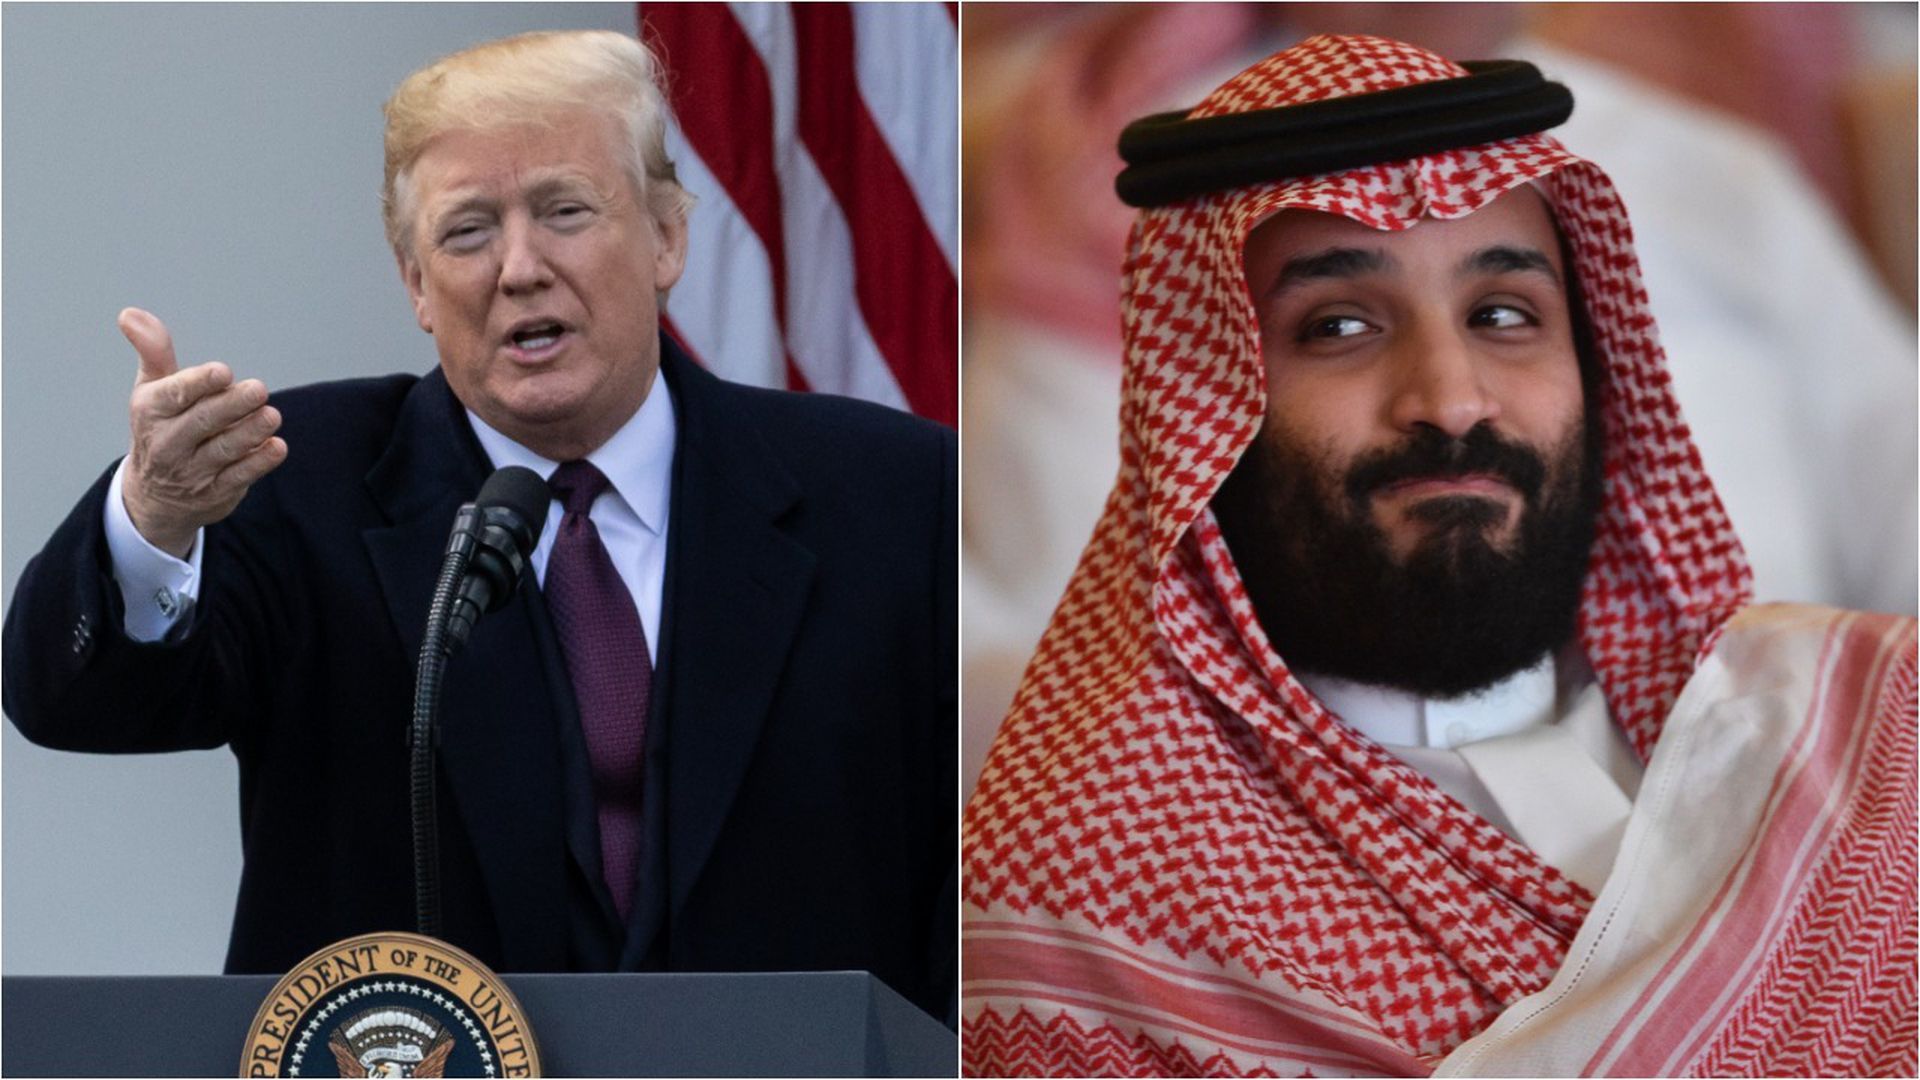 Split picture of President Trump and Mohammed bin Salman